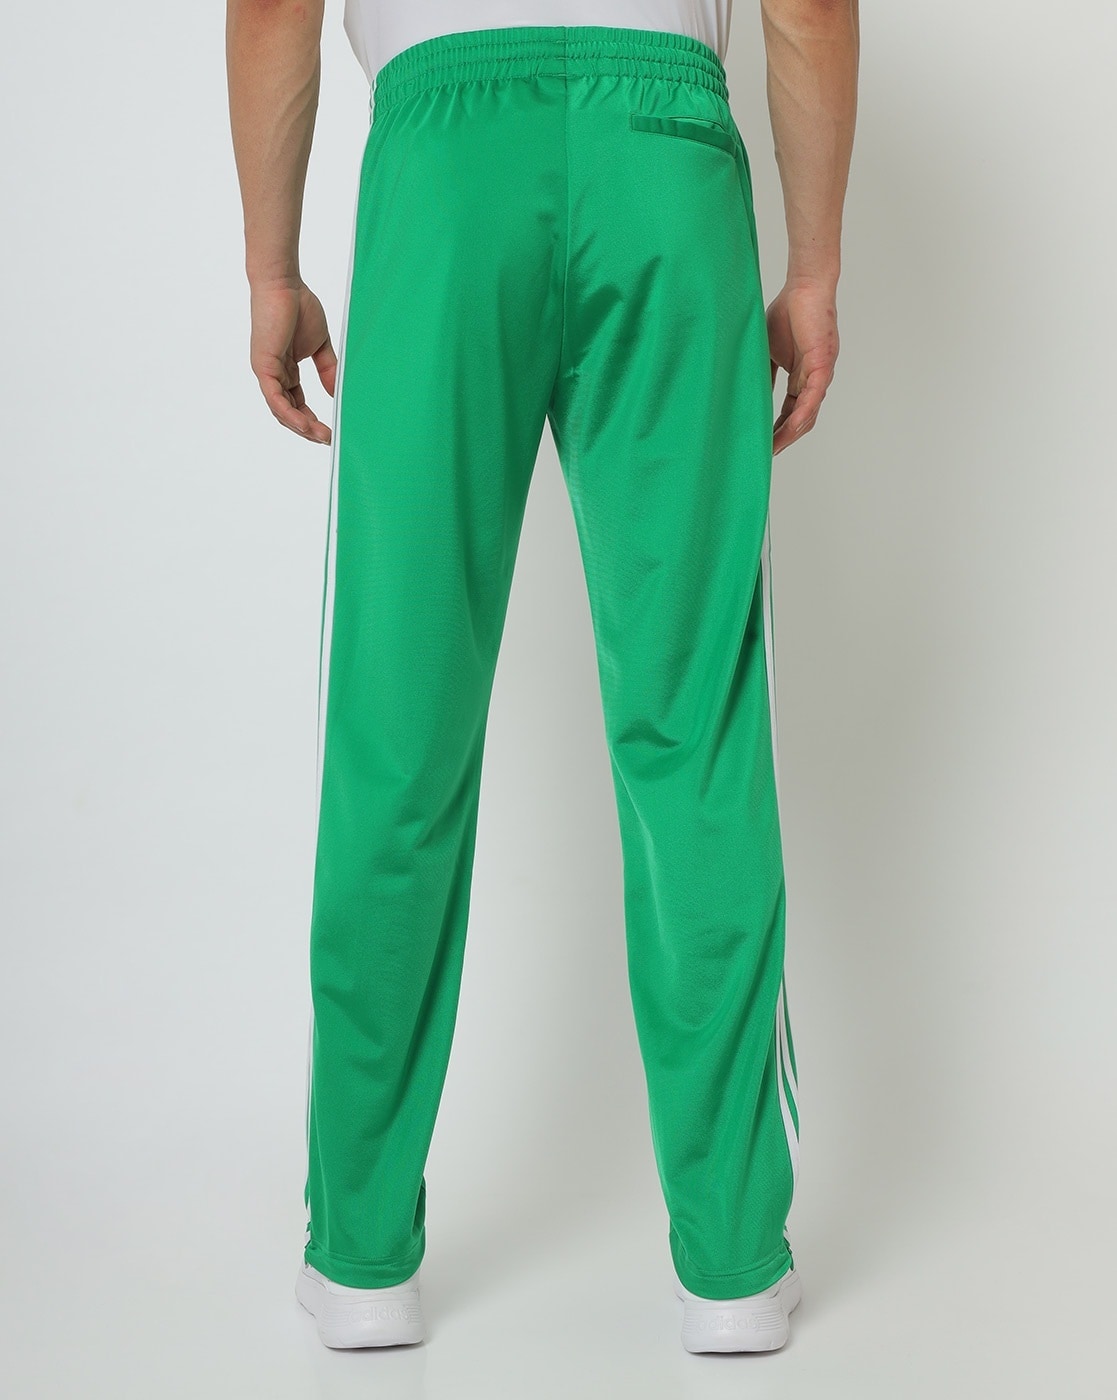 New Adidas Originals Camo Firebird Men Pants Green White Camouflage Style  Z32731 | eBay